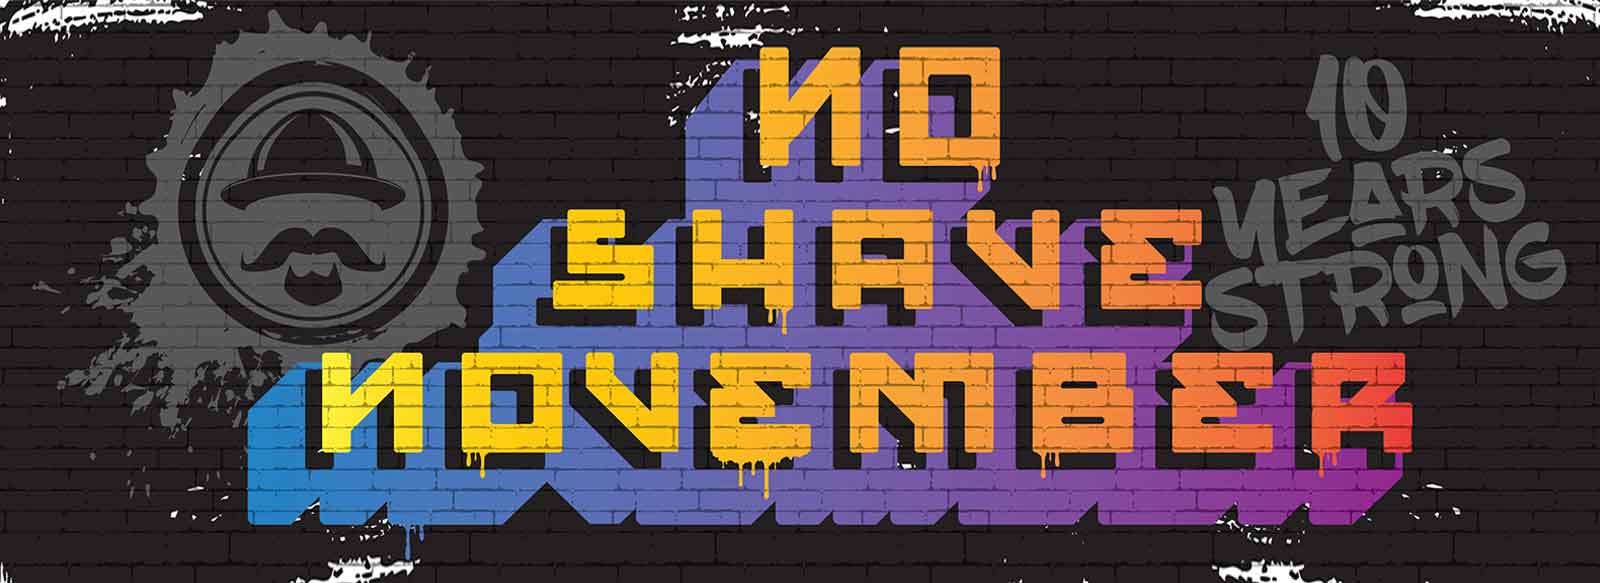 No Shave November!